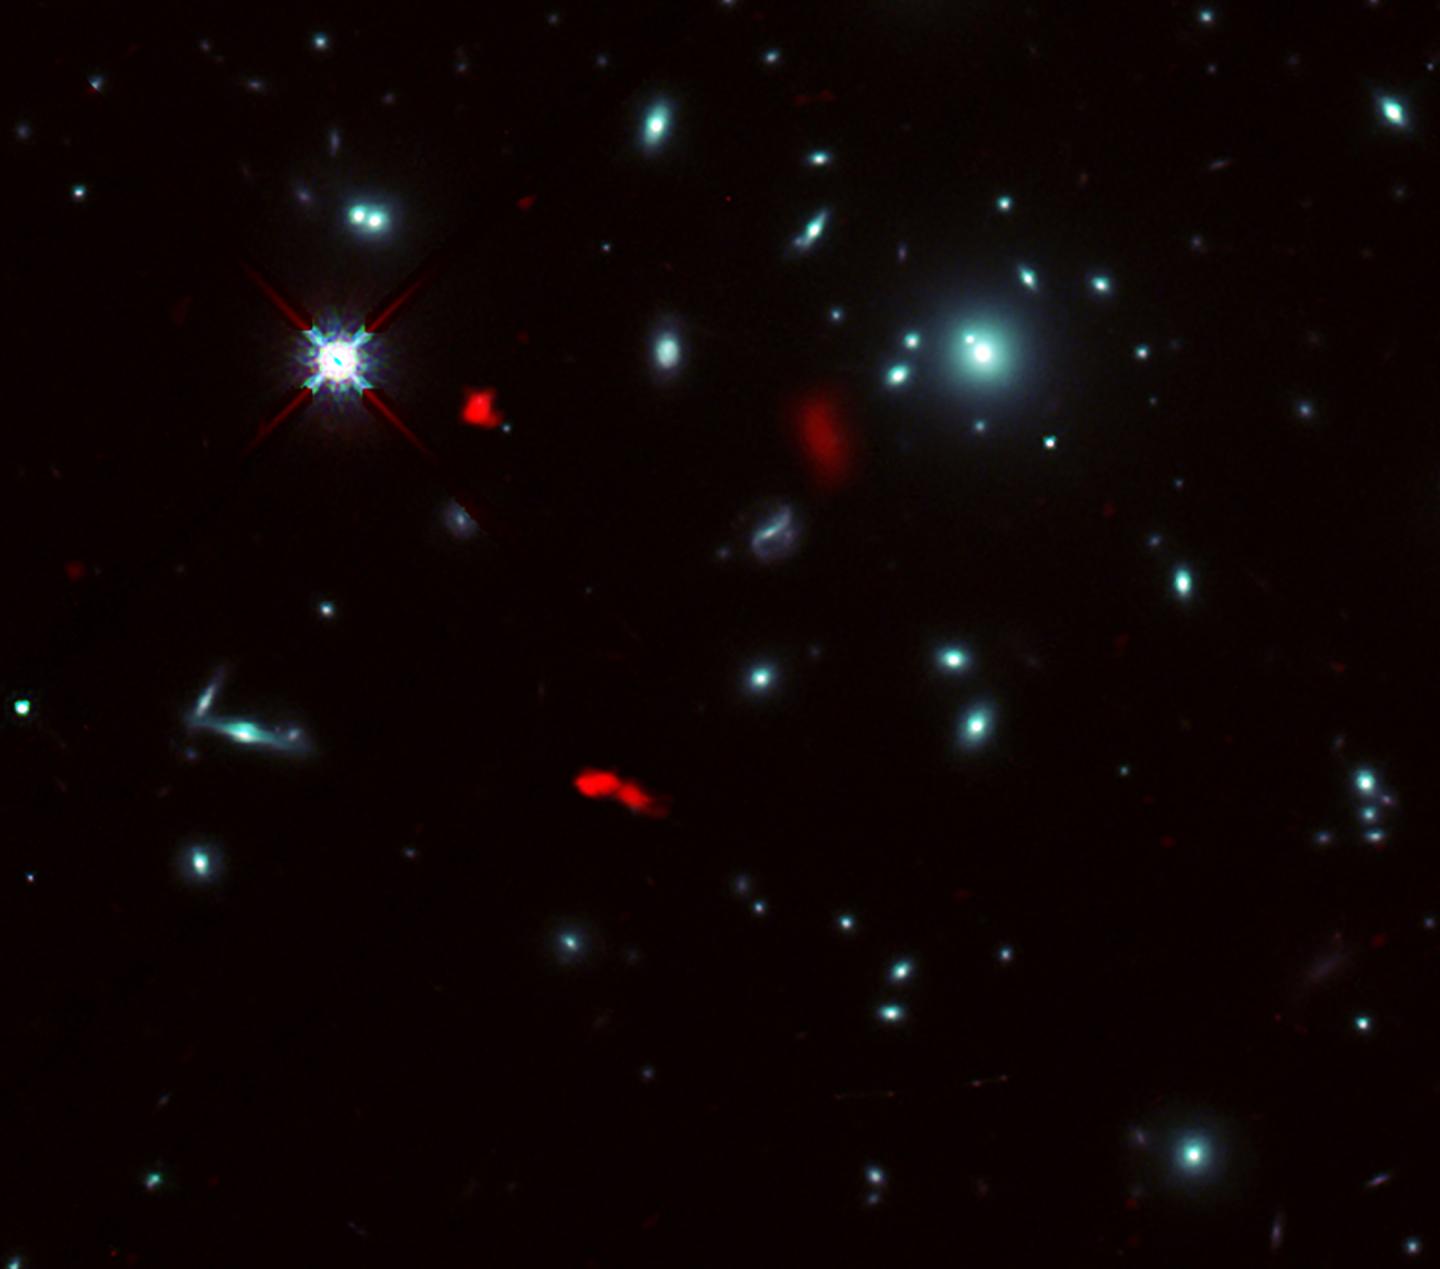 Image of the galaxy cluster RXCJ0600-2007 and the distant galaxy RXCJ0600-z6